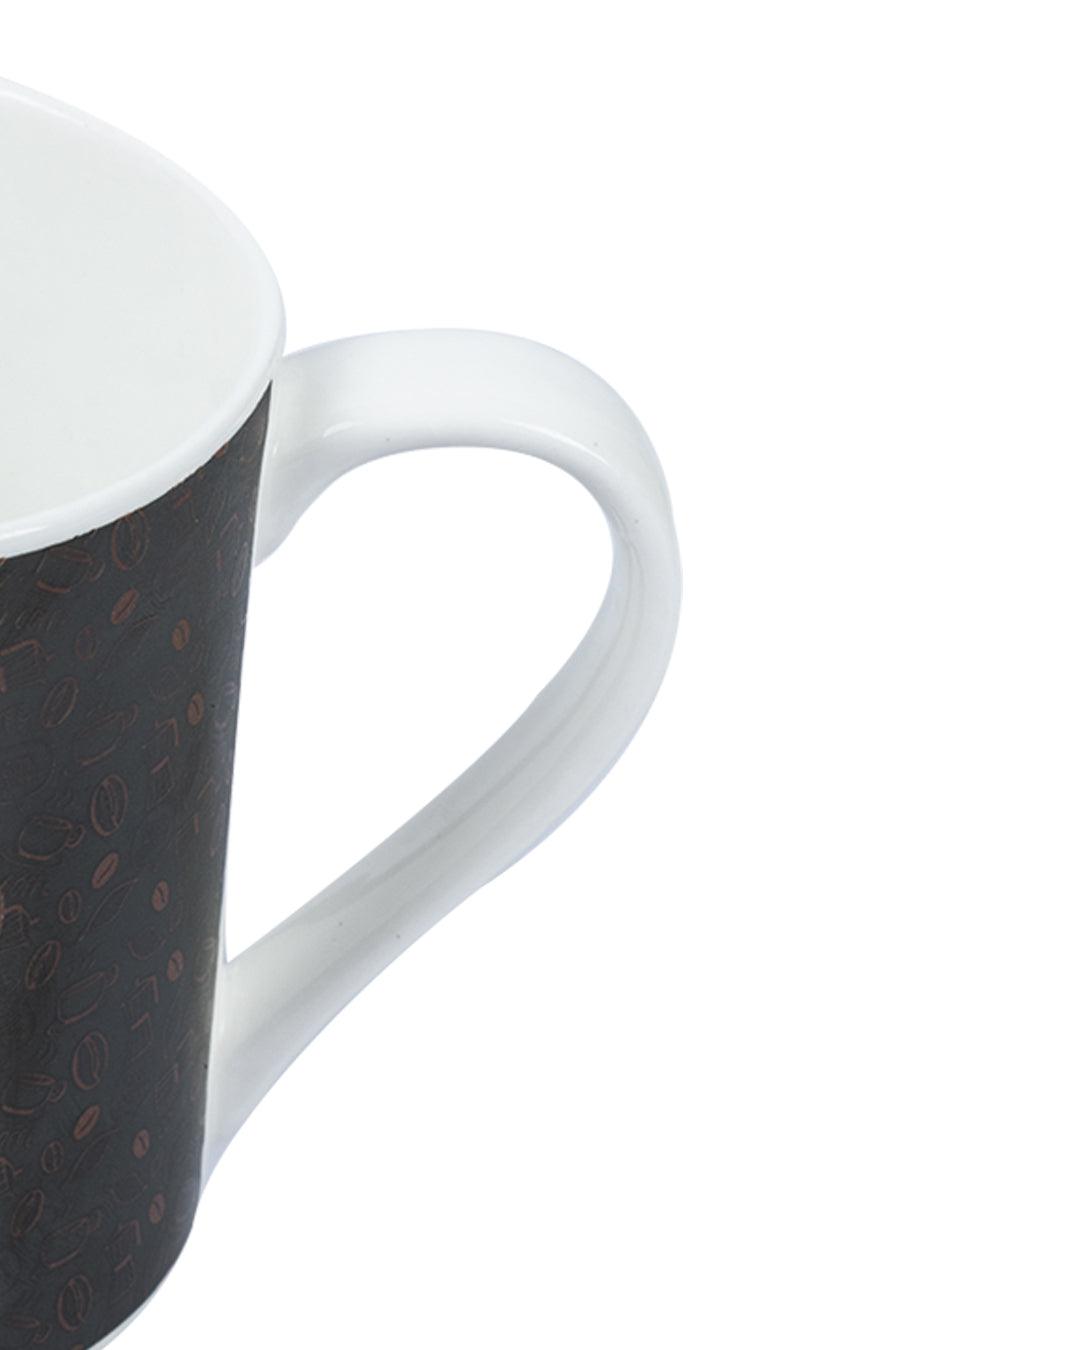 'DRINK COFFEE AND DO GOOD' graphic print Ceramic Milk, Tea & Coffee Mugs (Set Of 2, 340 mL) - MARKET 99